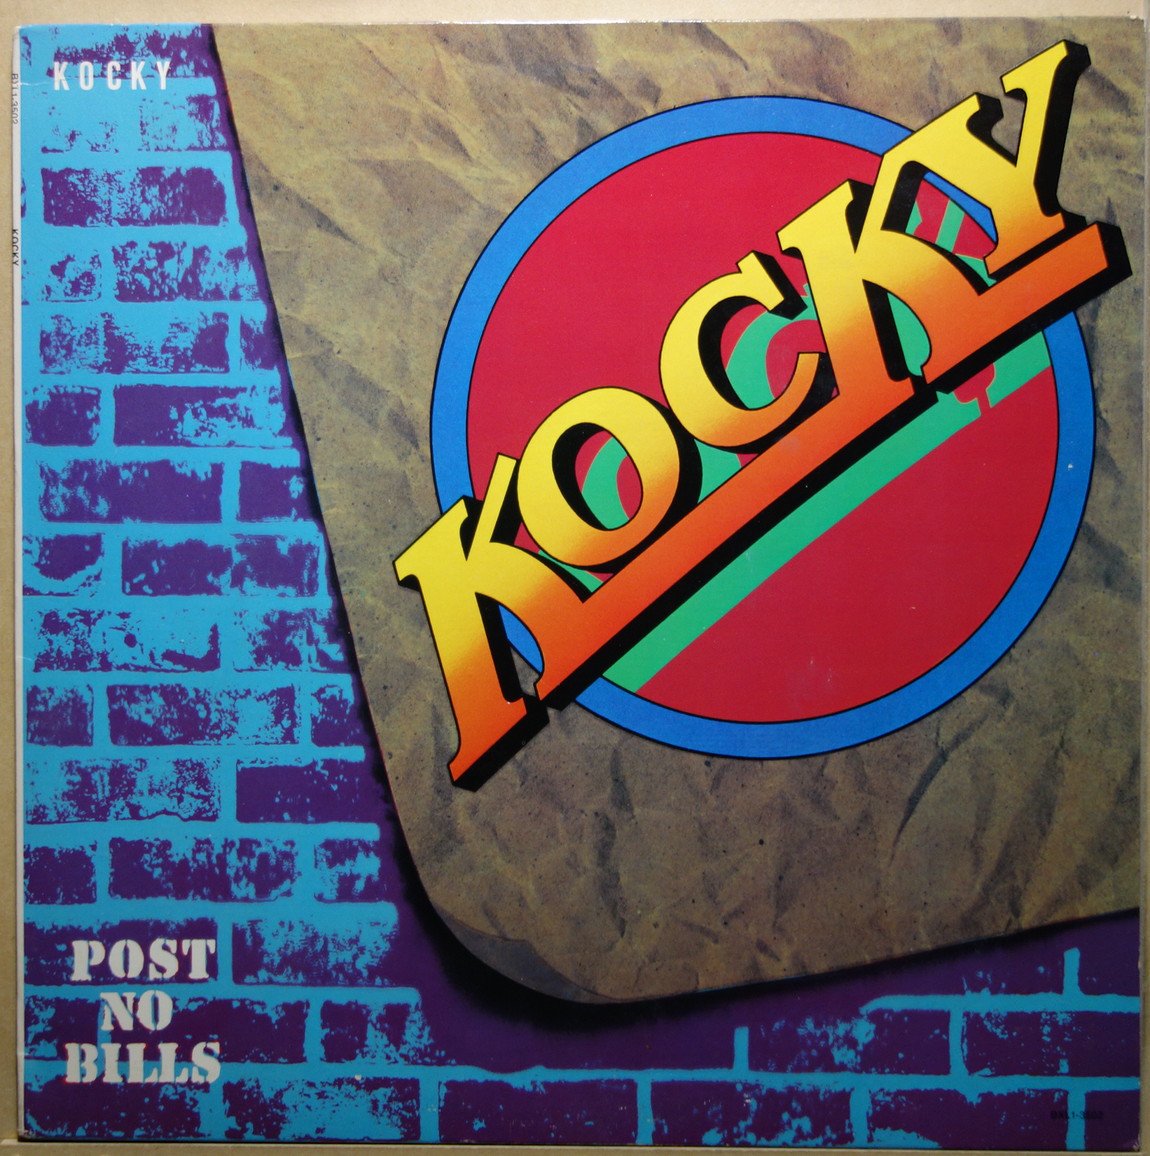 Kocky - Post No Bills - Vinylian - Vintage Vinyl Record Shop